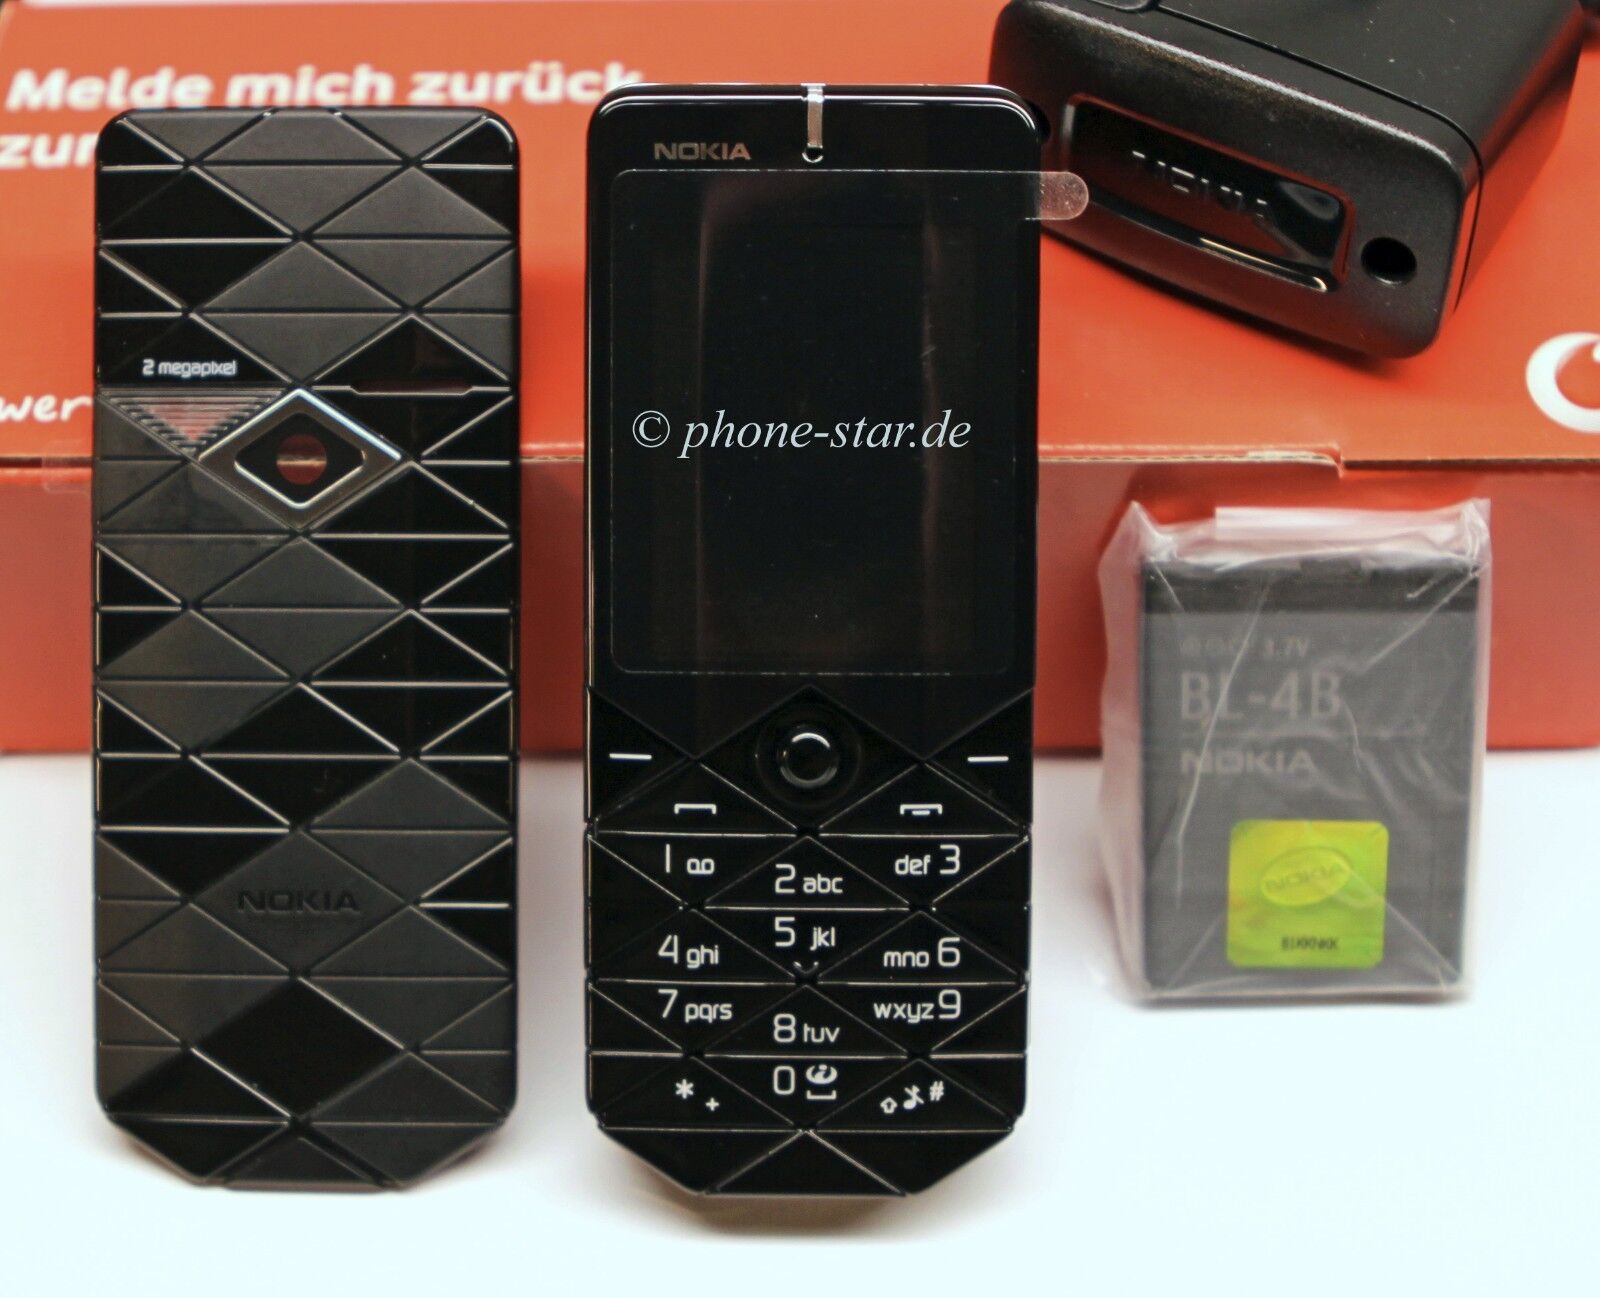 Nokia 7500 Prism Tasten-Handy Tri-Band Kamera Bluetooth Mobile Phone Neu New Box